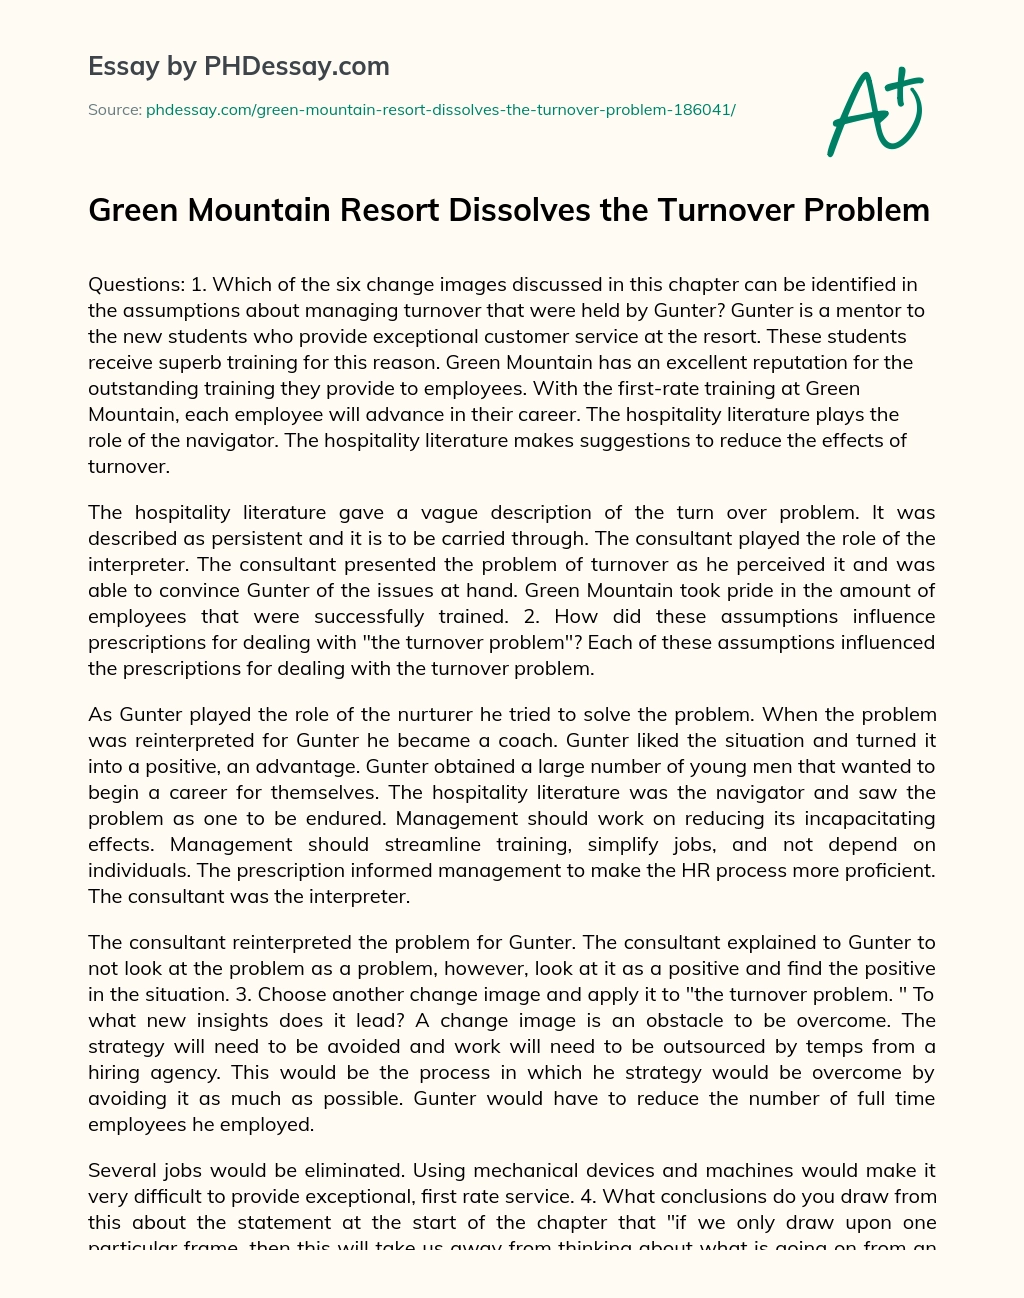 Green Mountain Resort Dissolves the Turnover Problem essay